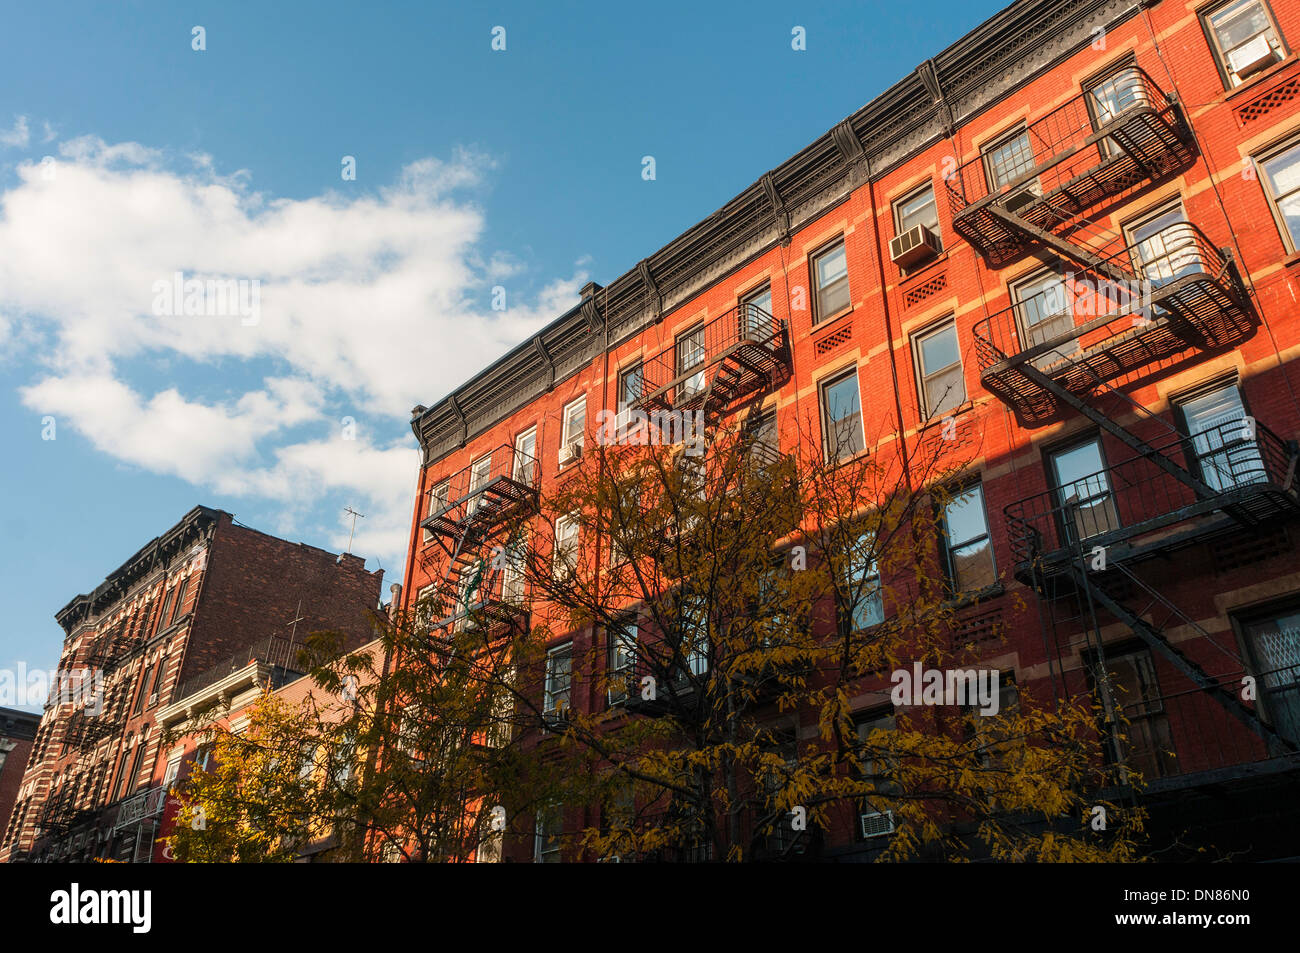 New York, NY 2 Nov 2013 - Greenwich Village tenement apartment buildings Stock Photo